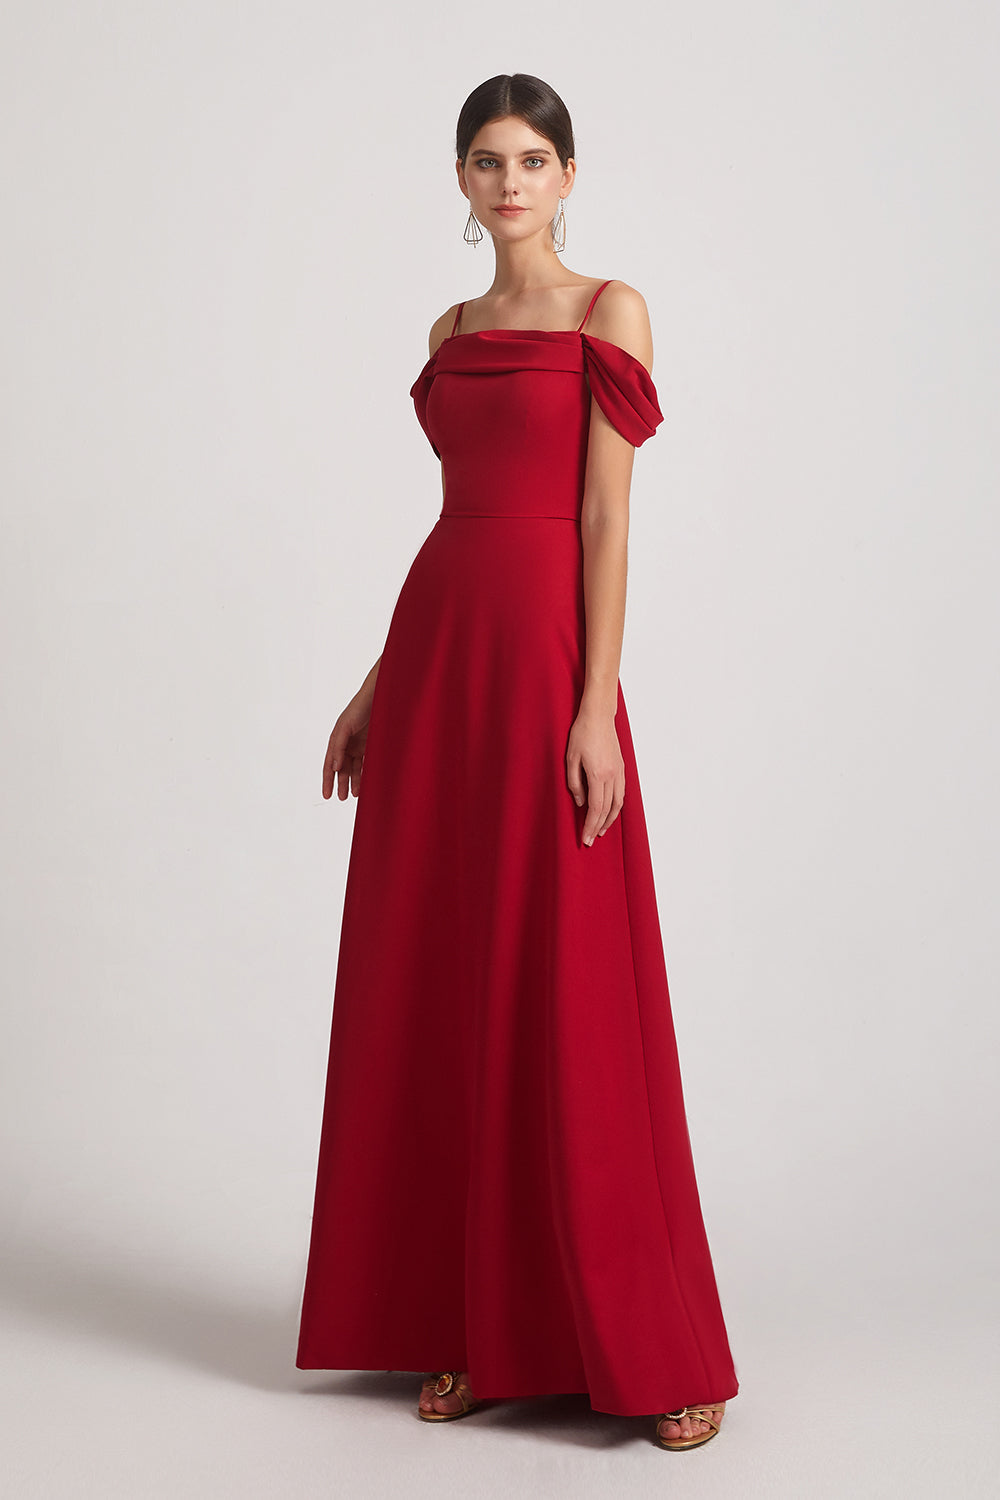 simple elegant gown